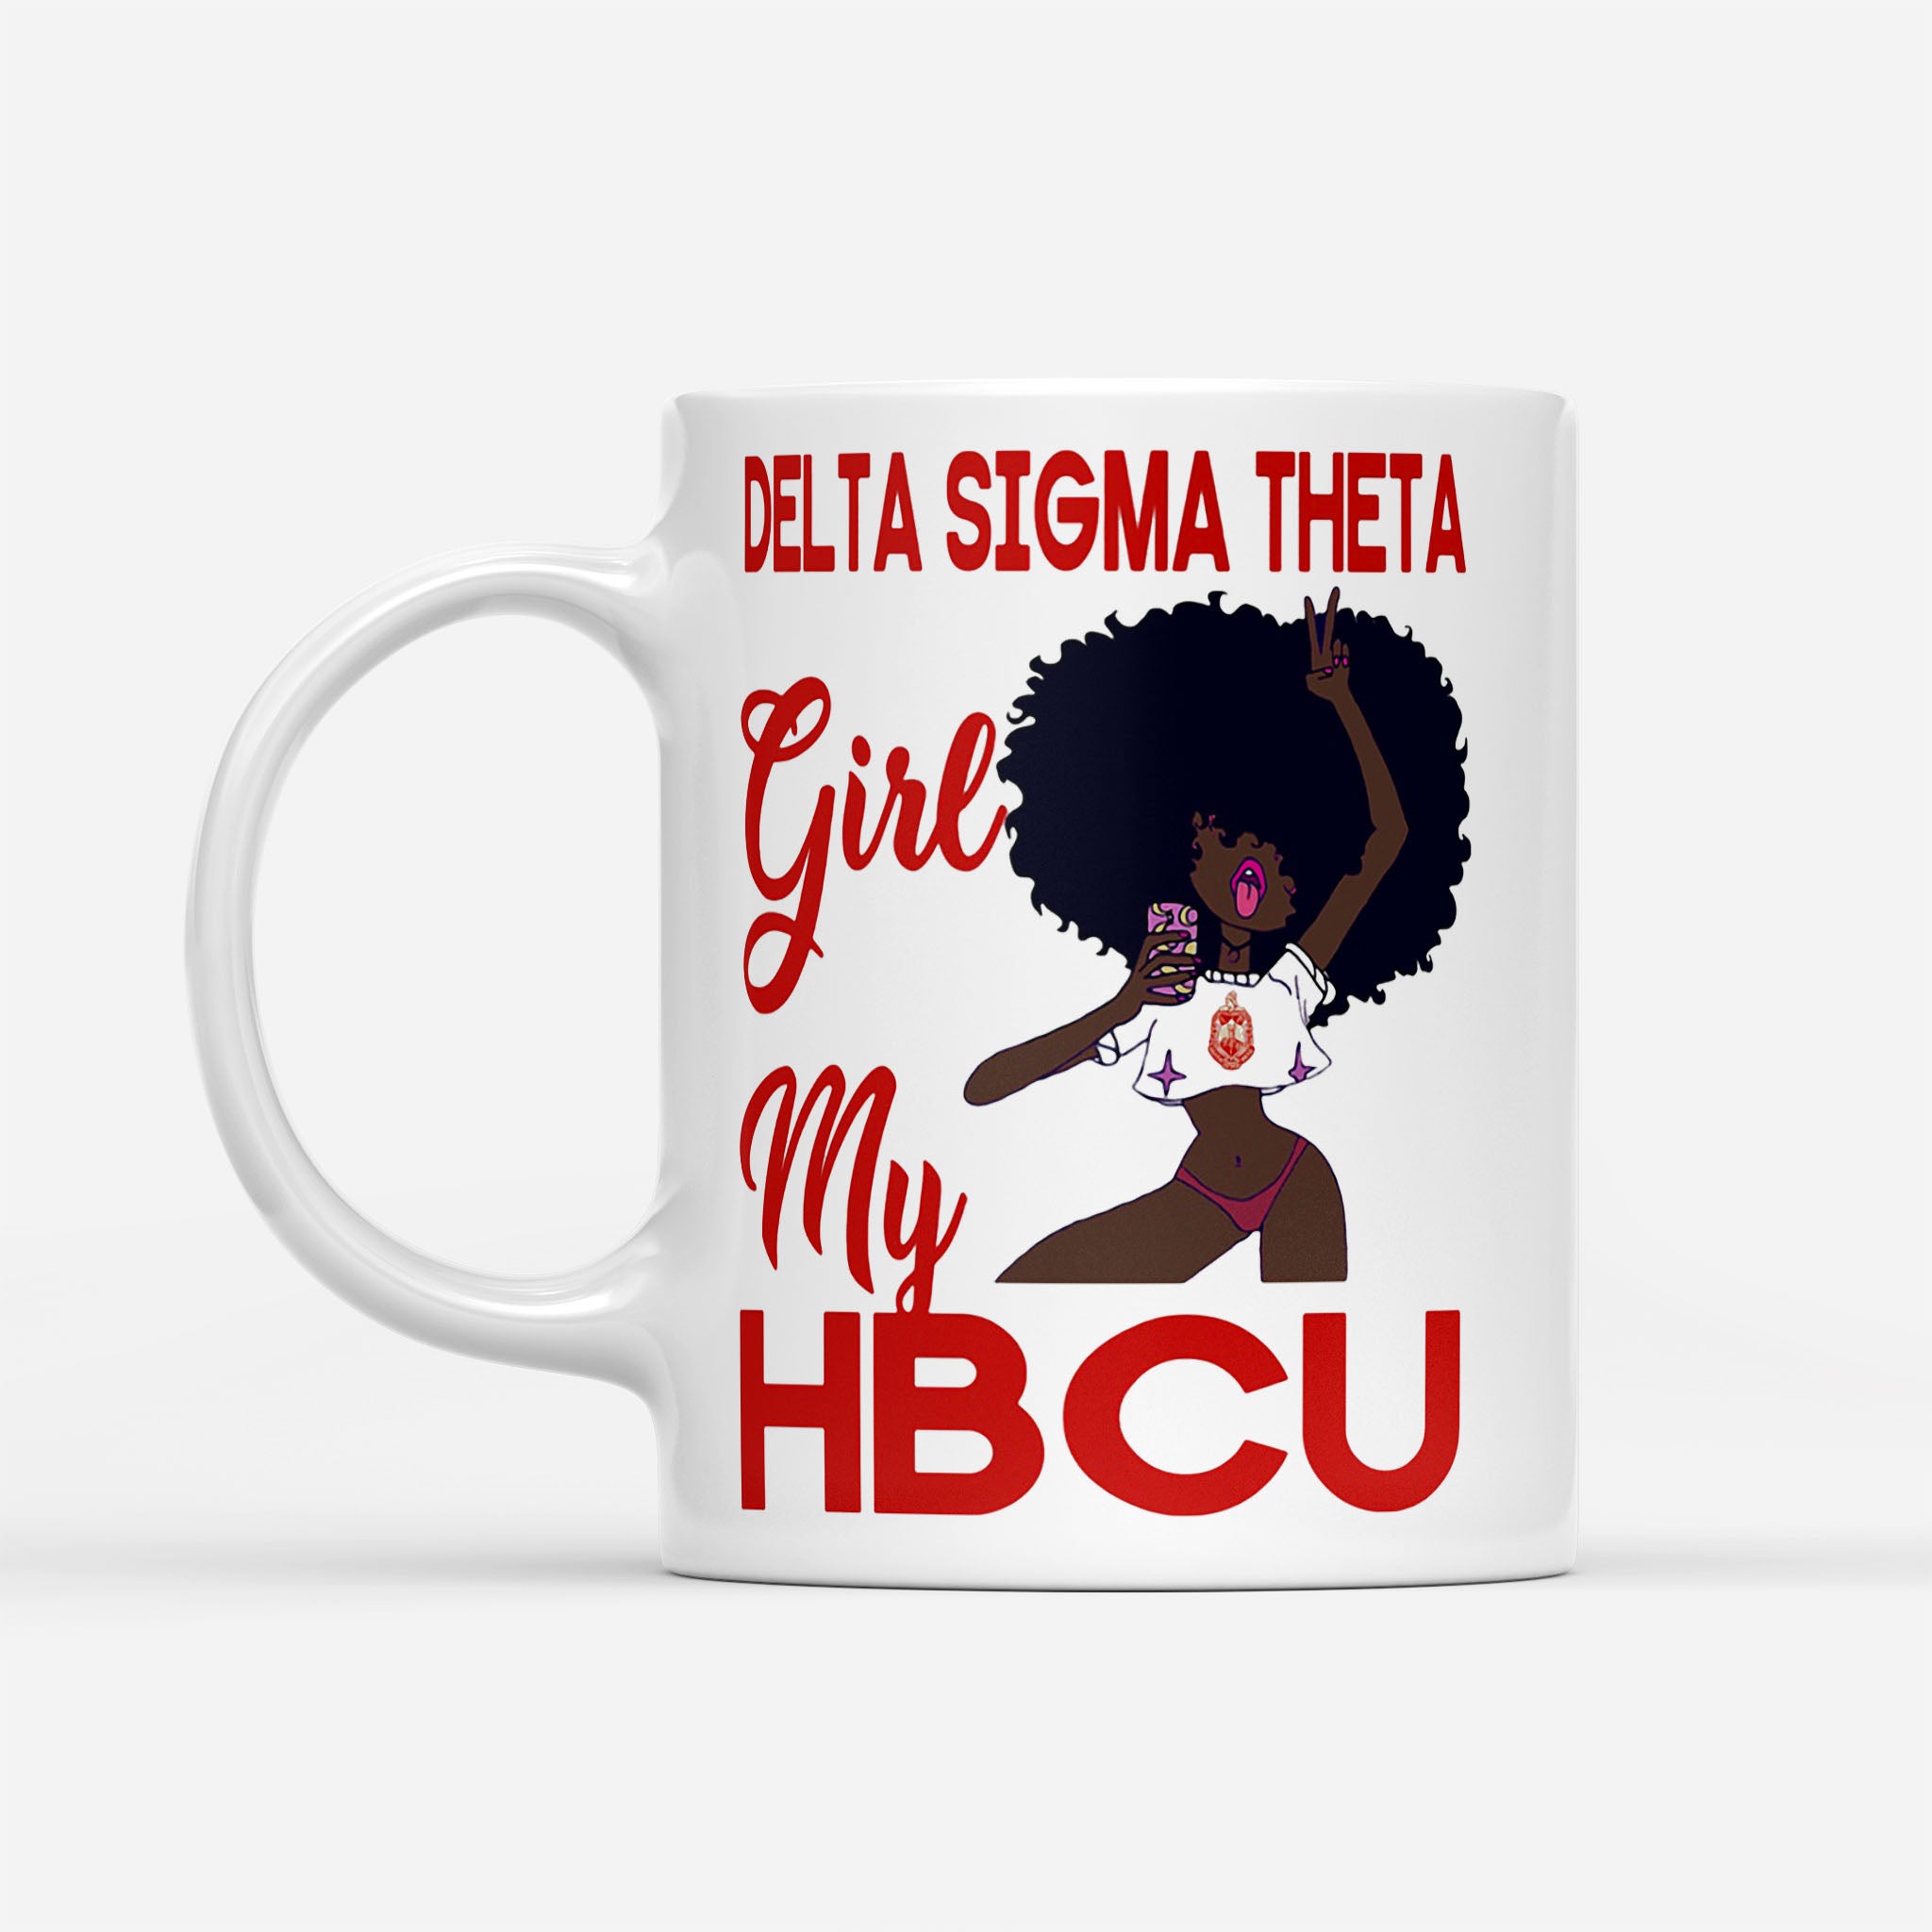 Delta Sigma Theta Girl My Hbcu - White Mug